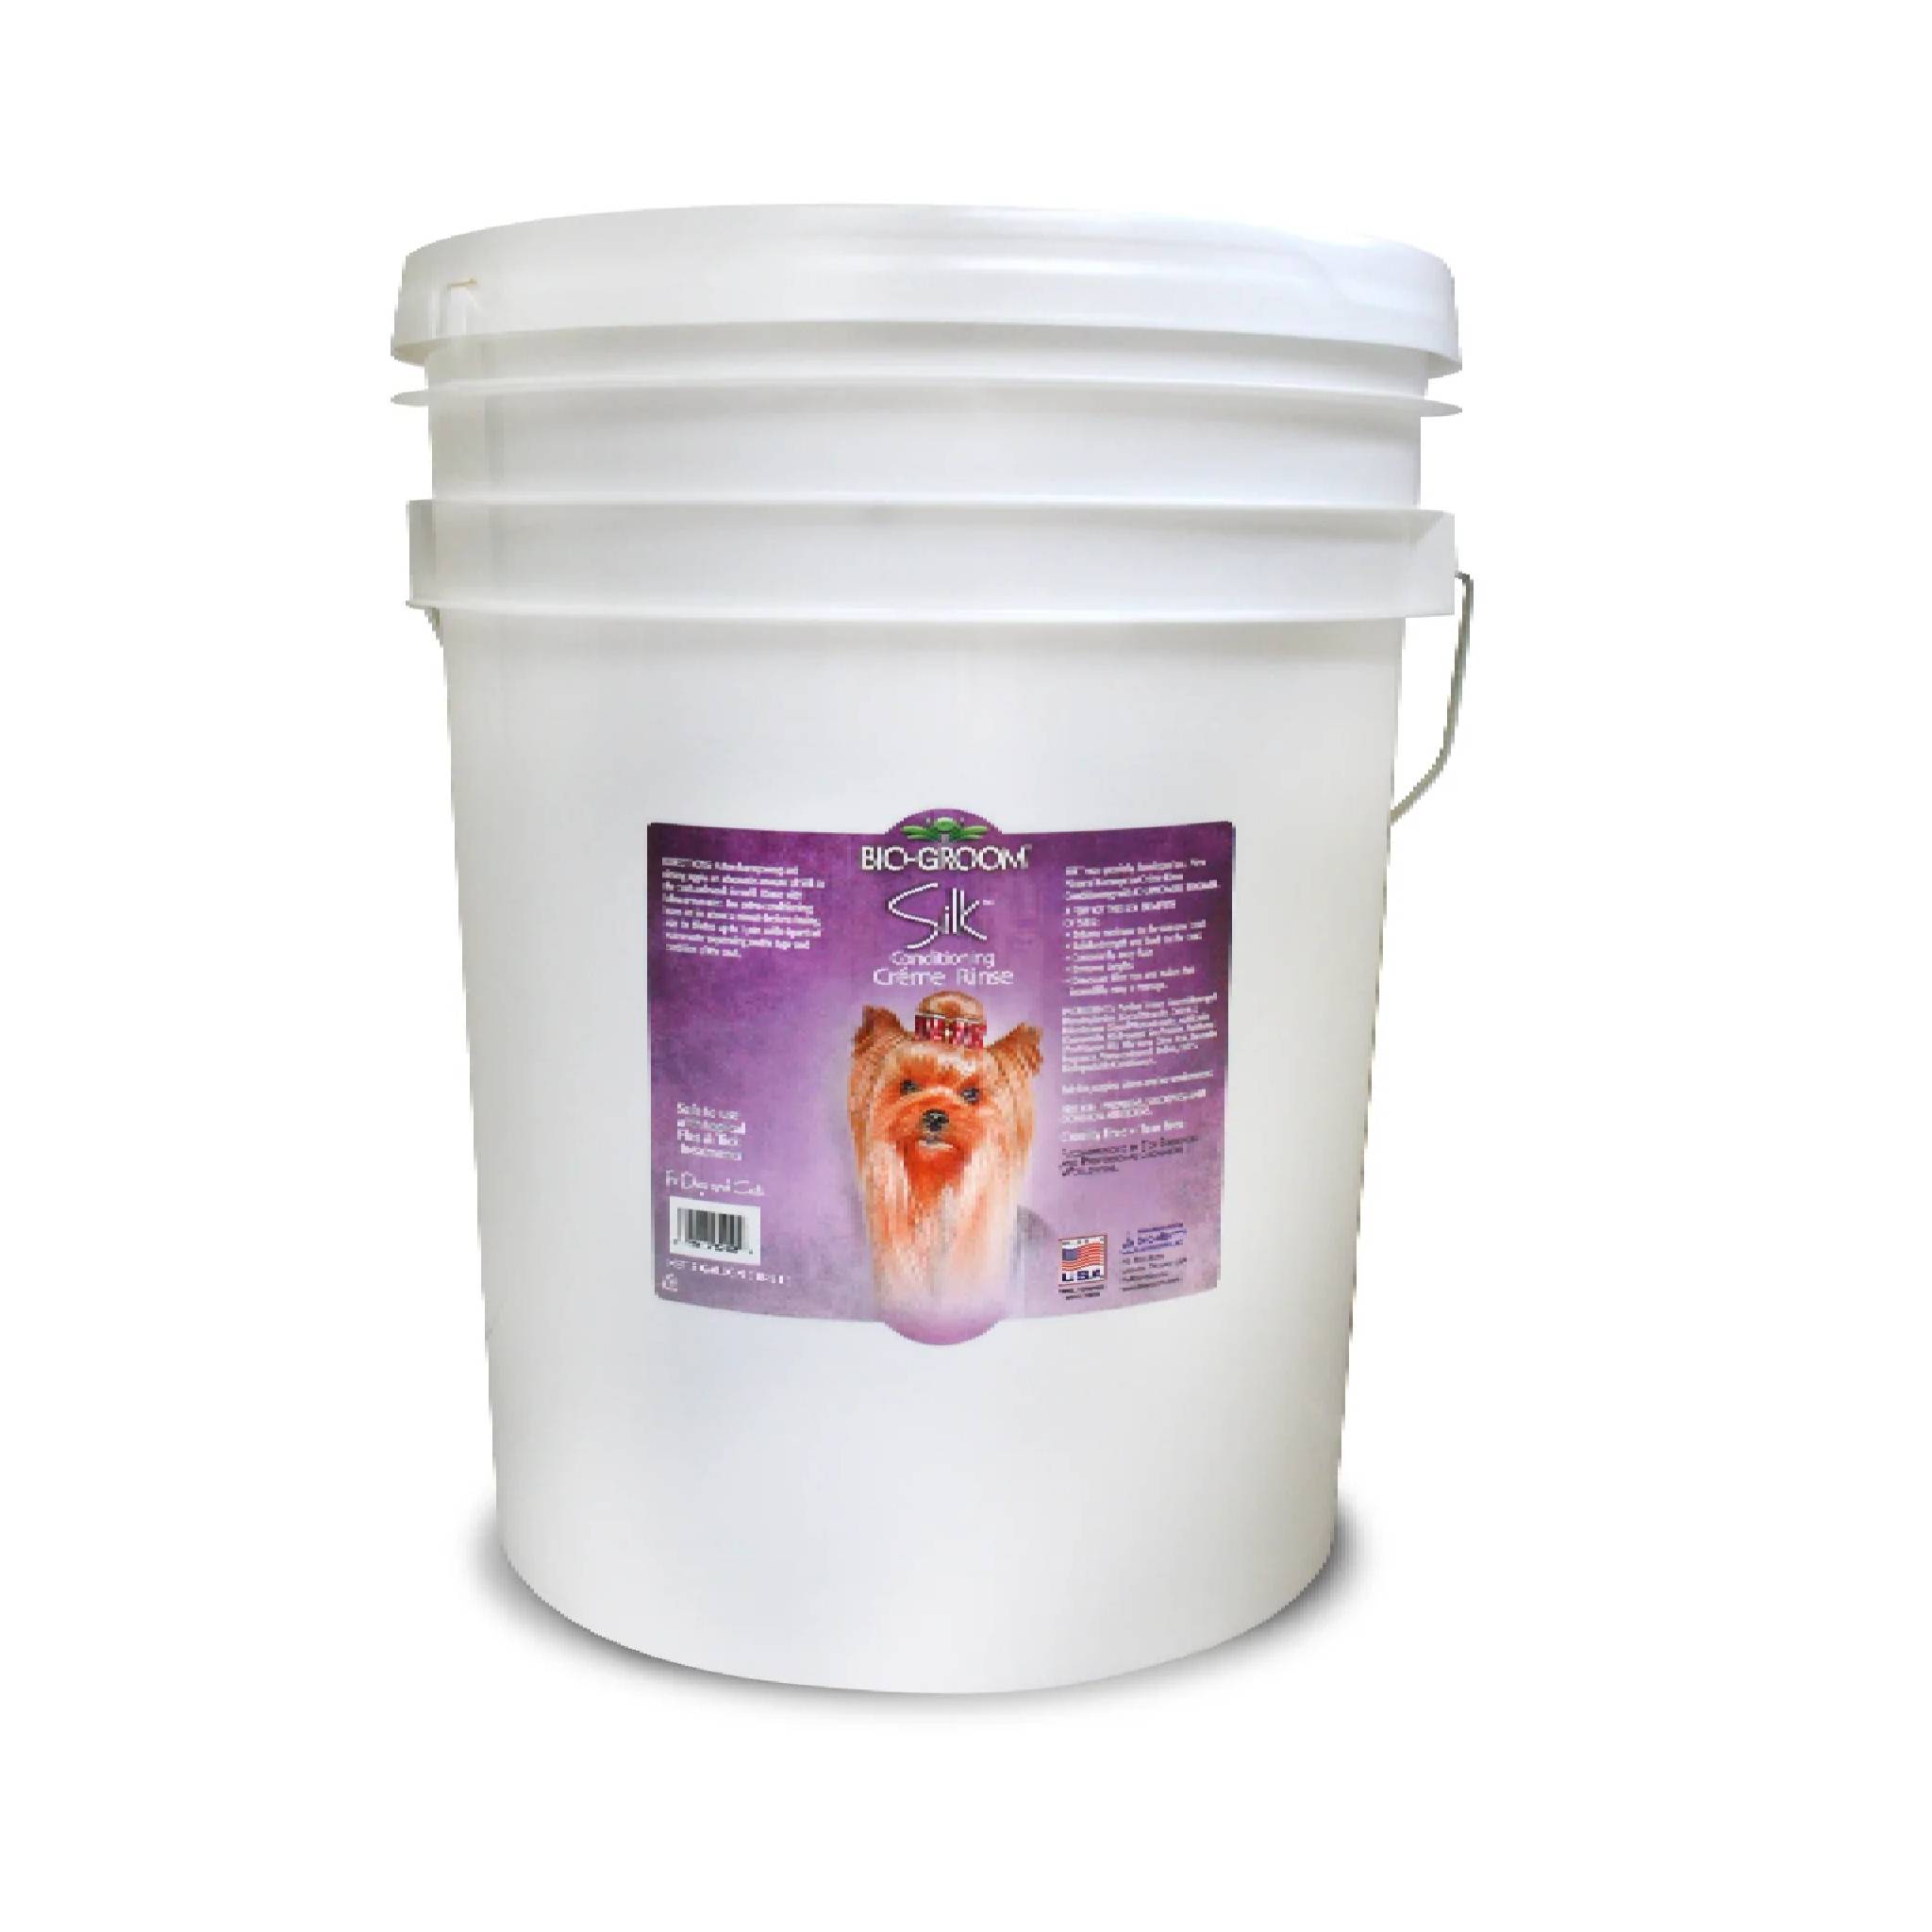 Biogroom Silk Creme Rinse Conditioner for pets